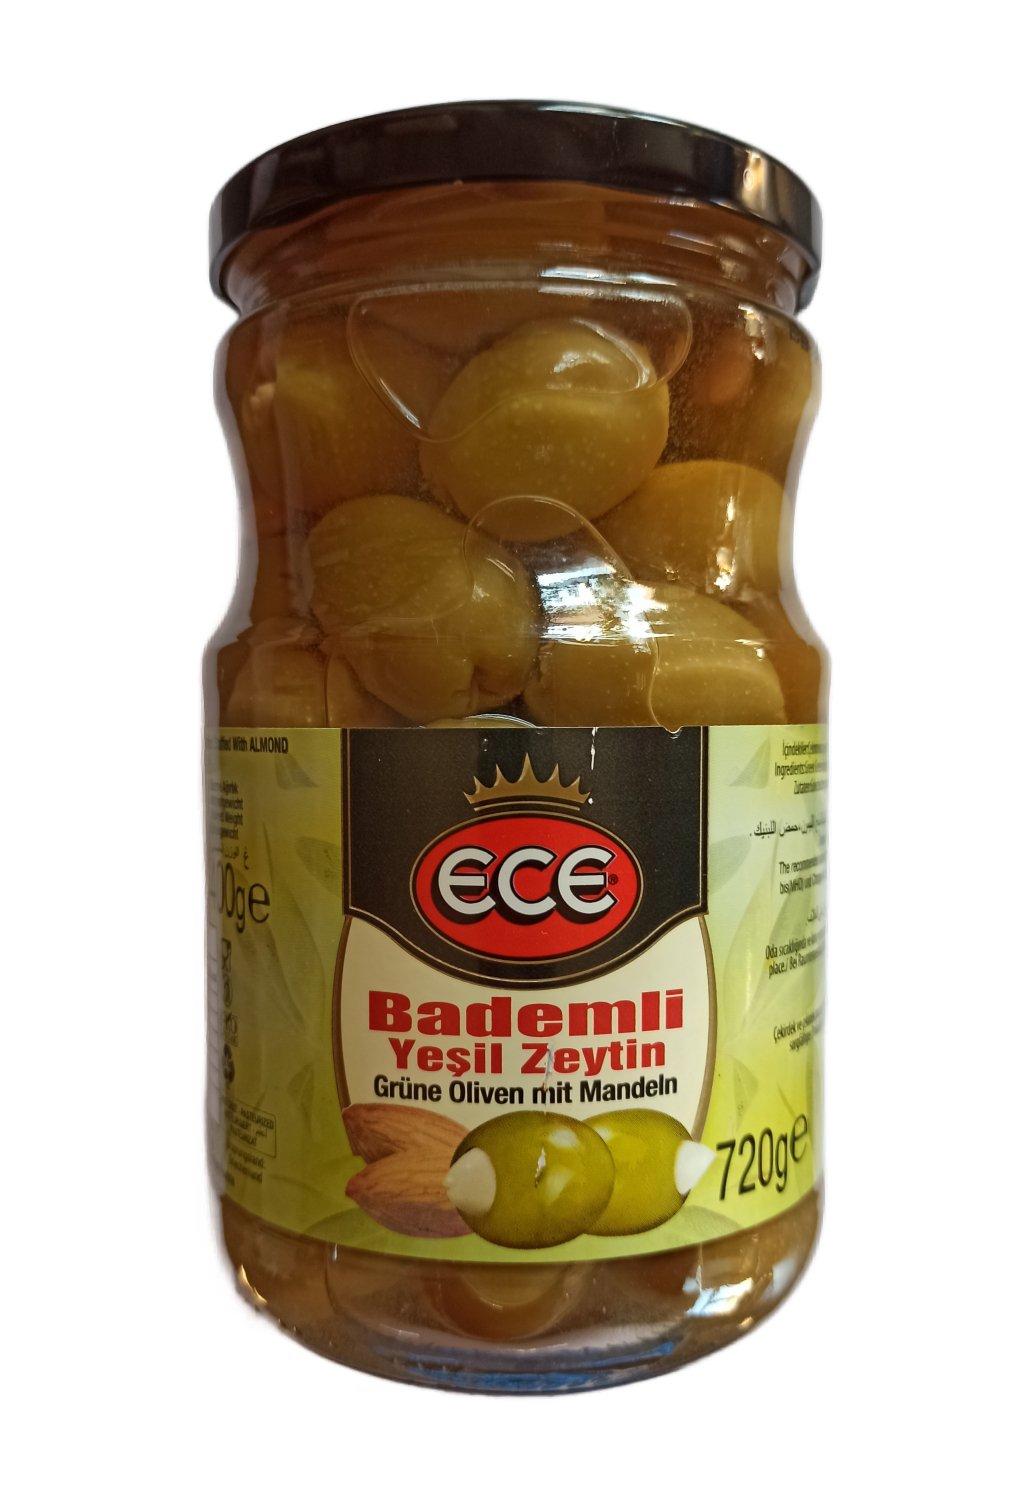 ECE - Bademli Siyah Zeytin - olivy plněné mandlí 720g